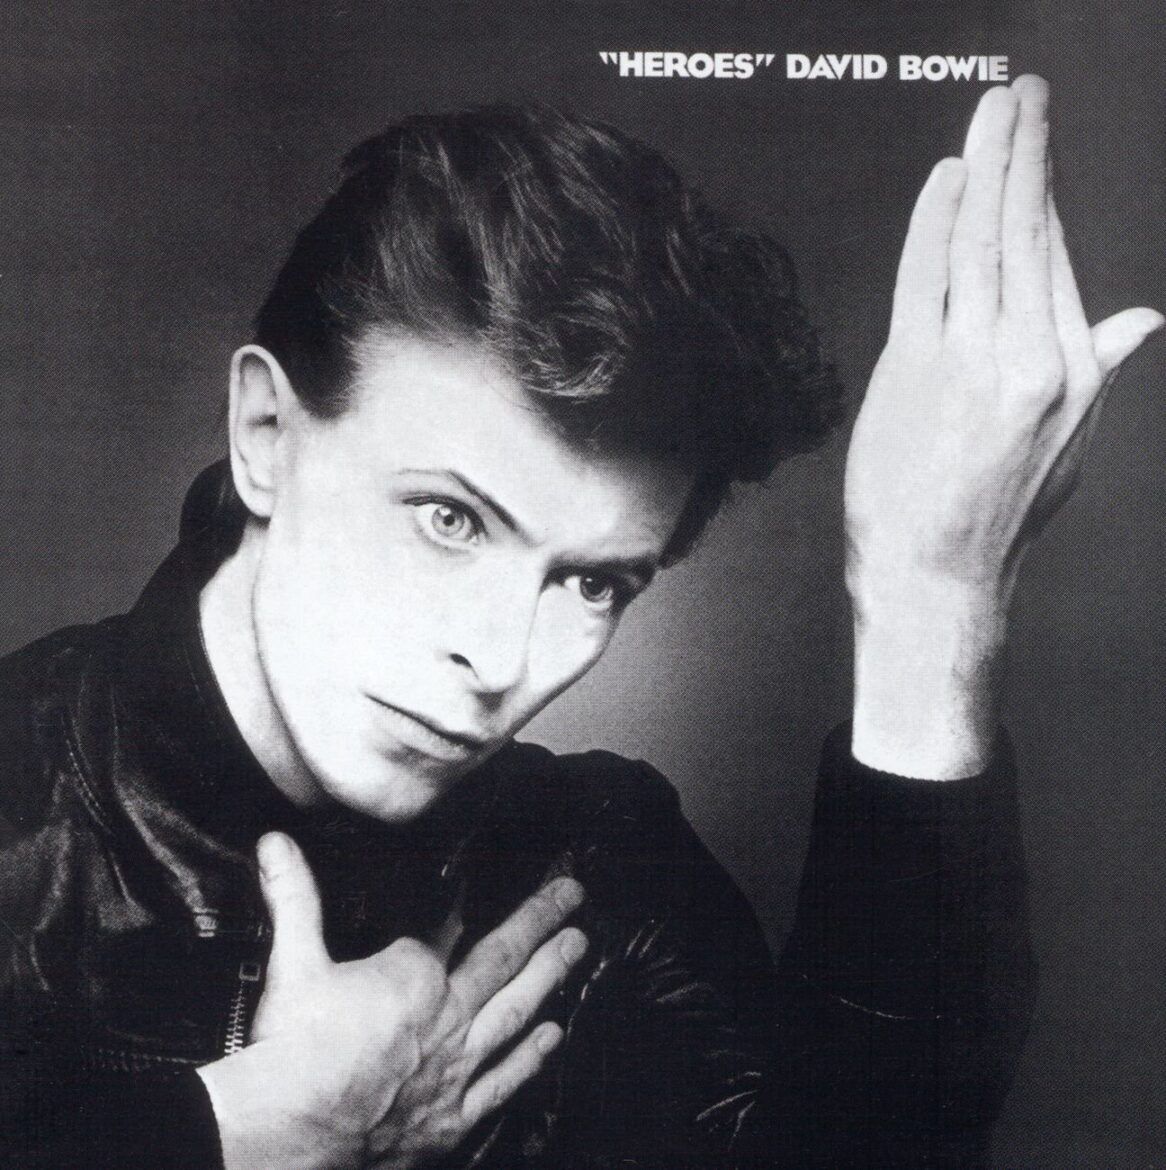 david-bowie-released-“heroes”-45-years-ago